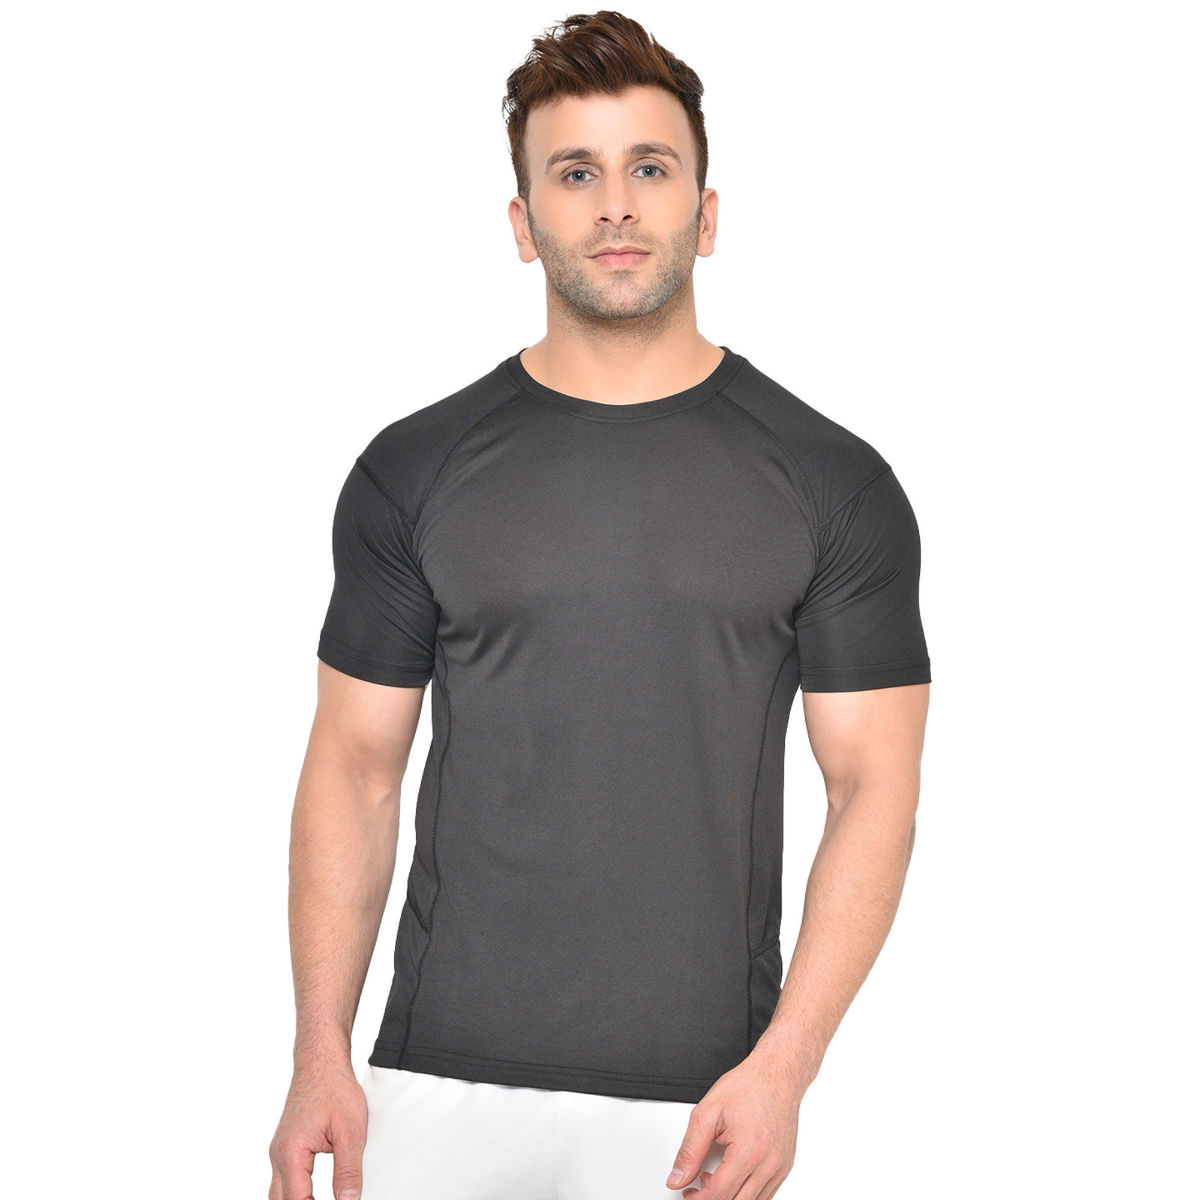 CHKOKKO Men Round Neck Regular Dry Fit Gym Sports T-Shirt (S)